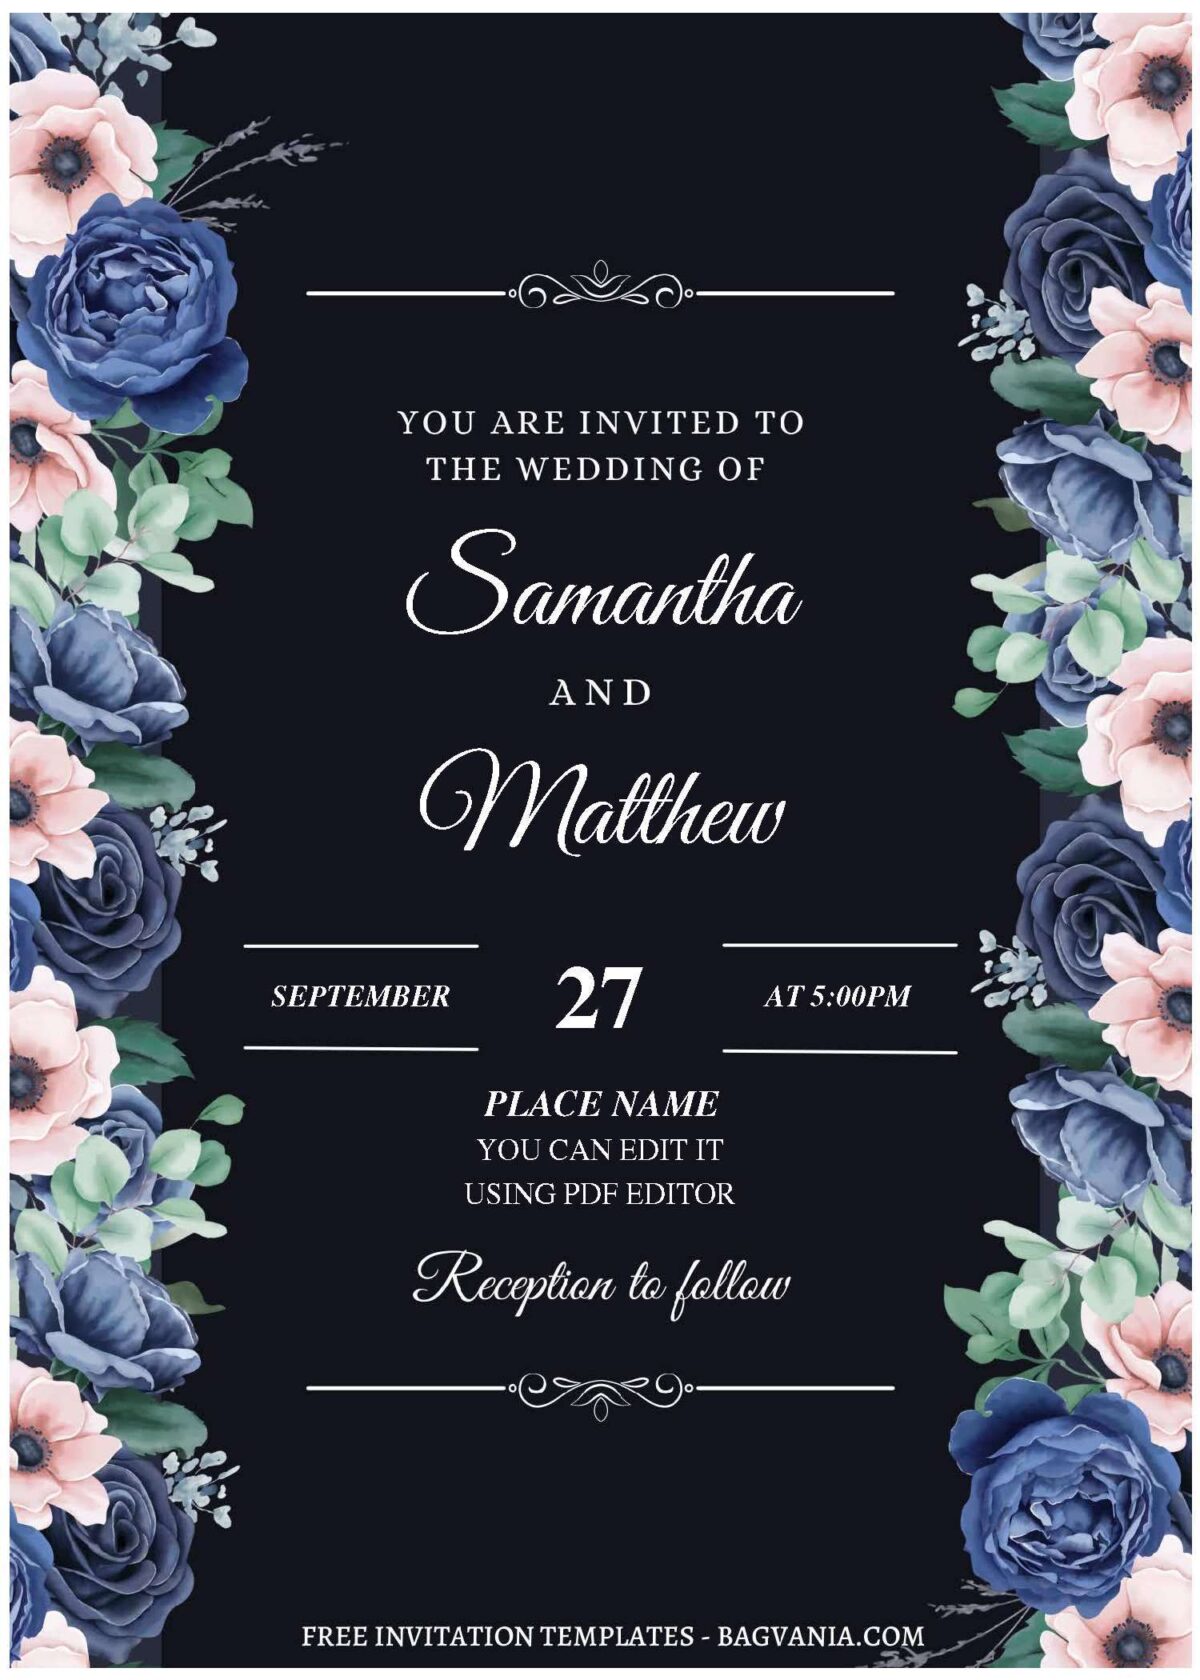 (Free Editable PDF) Anemone And Rose Wedding Invitation Templates C